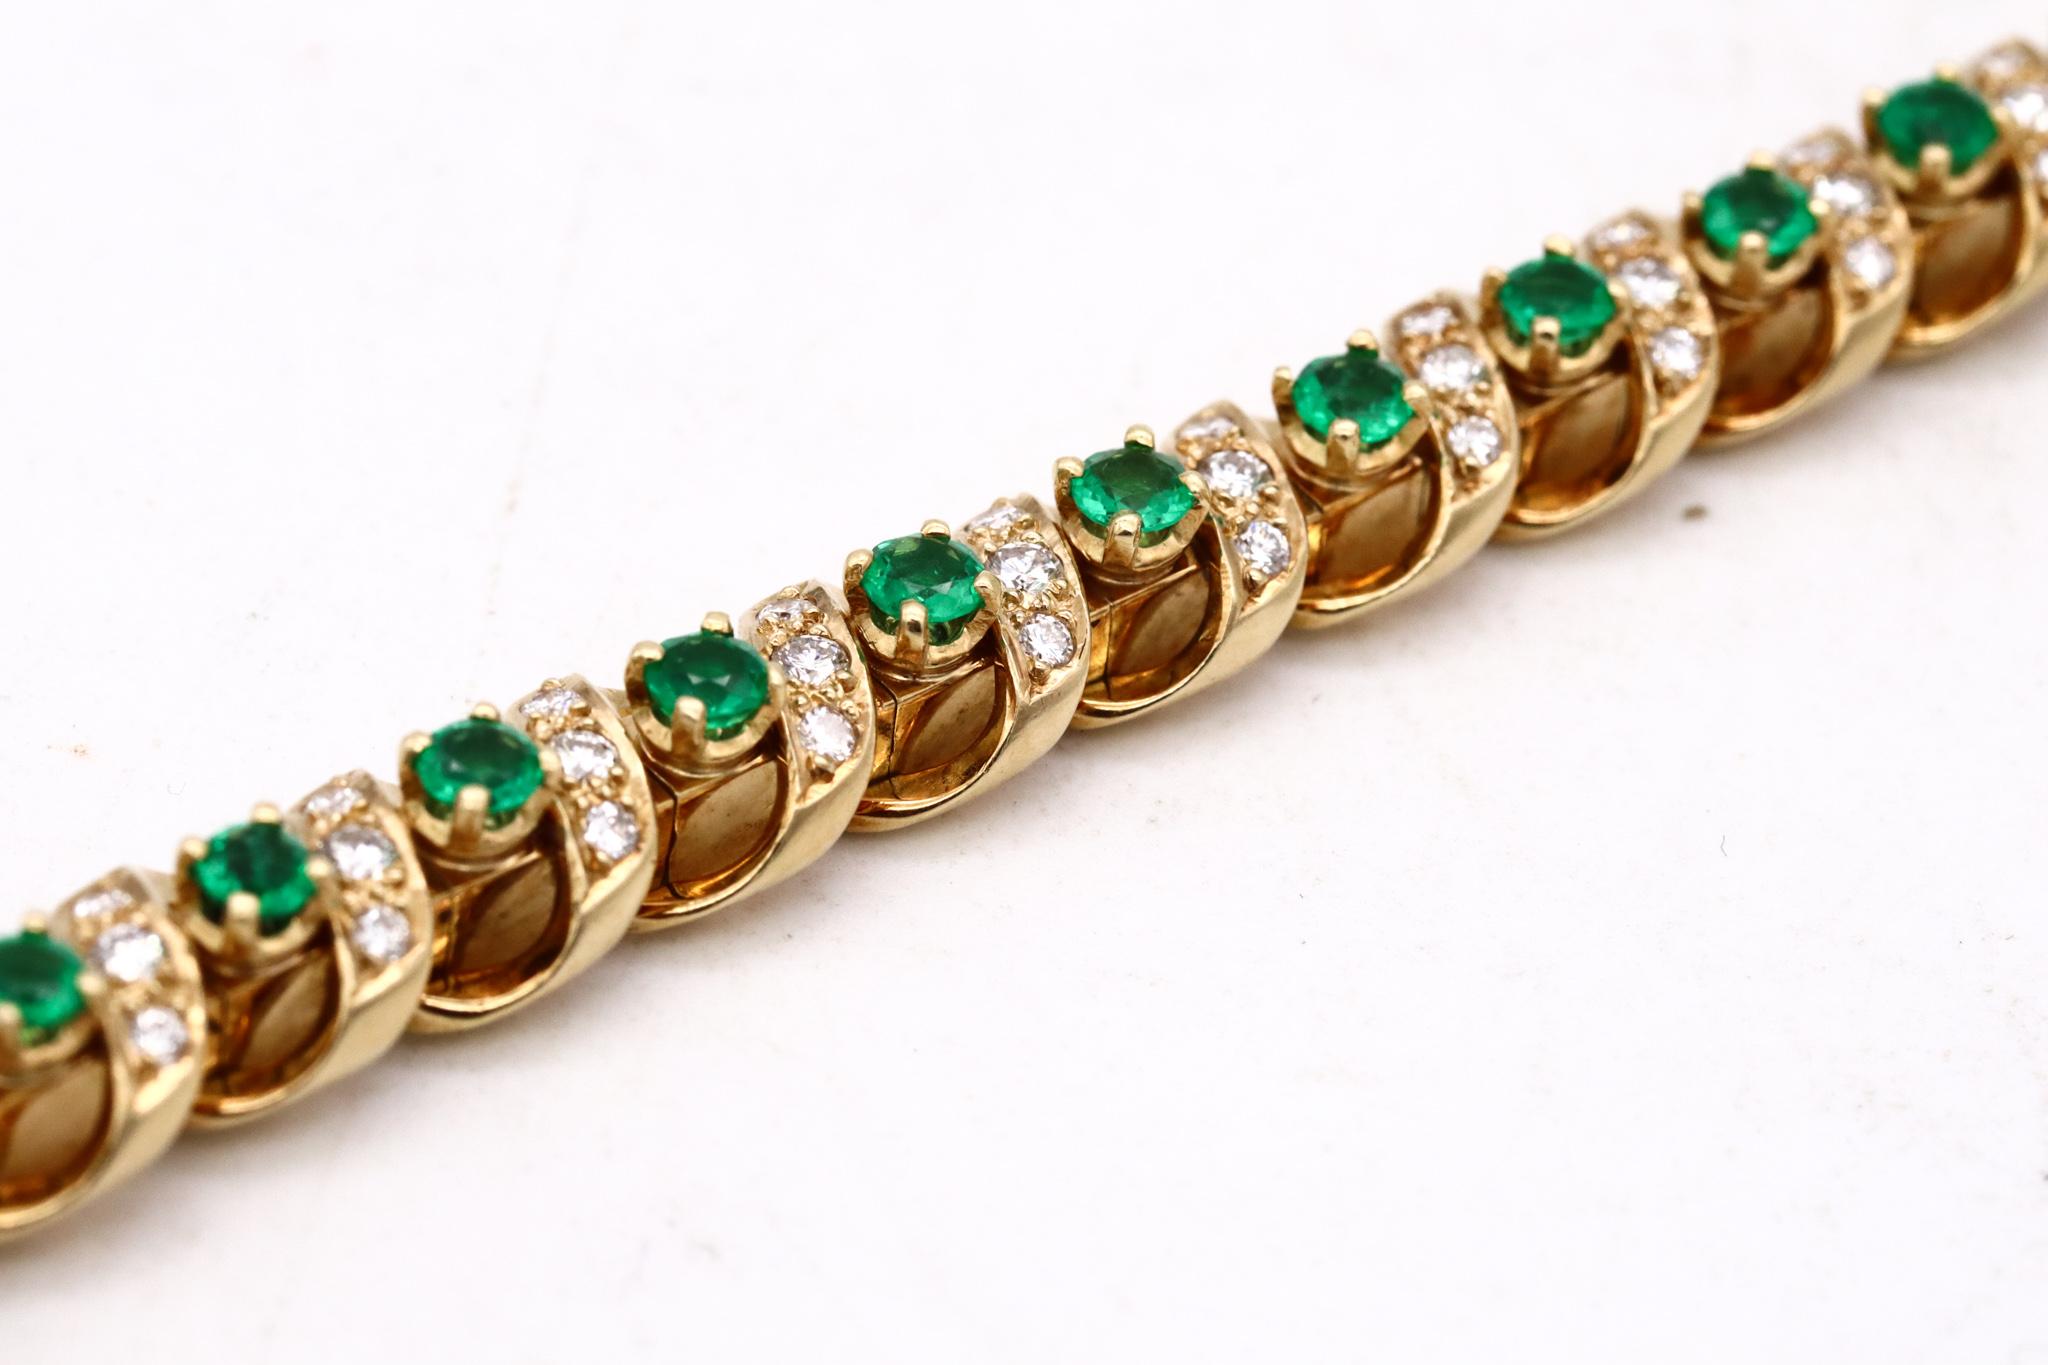 Retro Gubelin 1960 Swiss 18kt Gold Bracelet 4.64 Ctw Colombian Emeralds and Diamonds For Sale